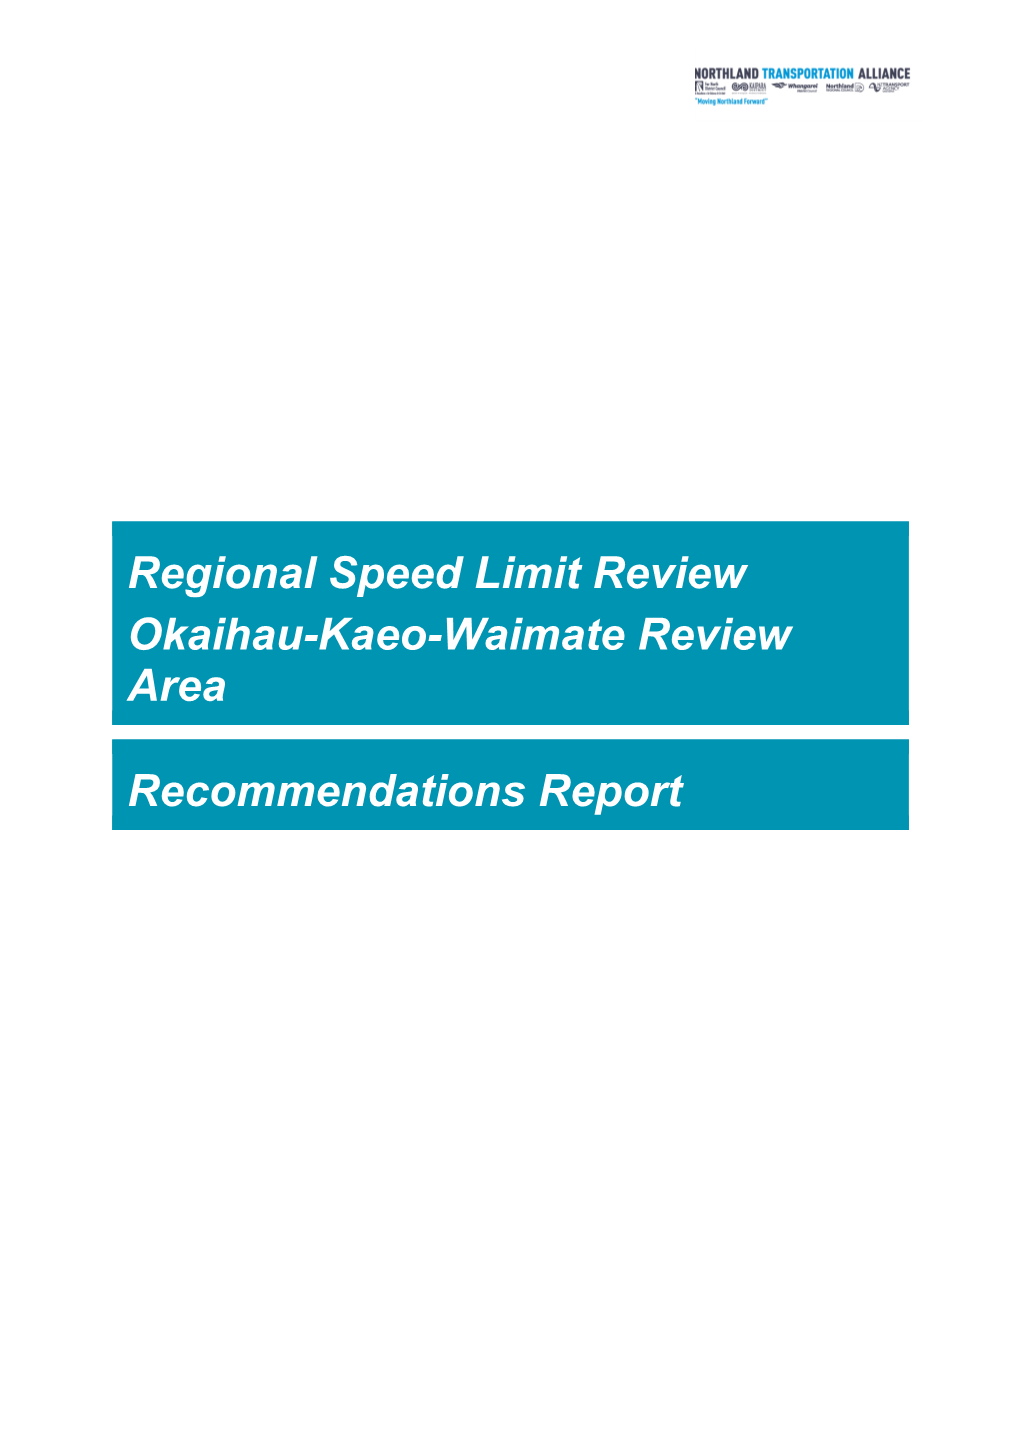 Regional Speed Limit Review Okaihau-Kaeo-Waimate Review Area